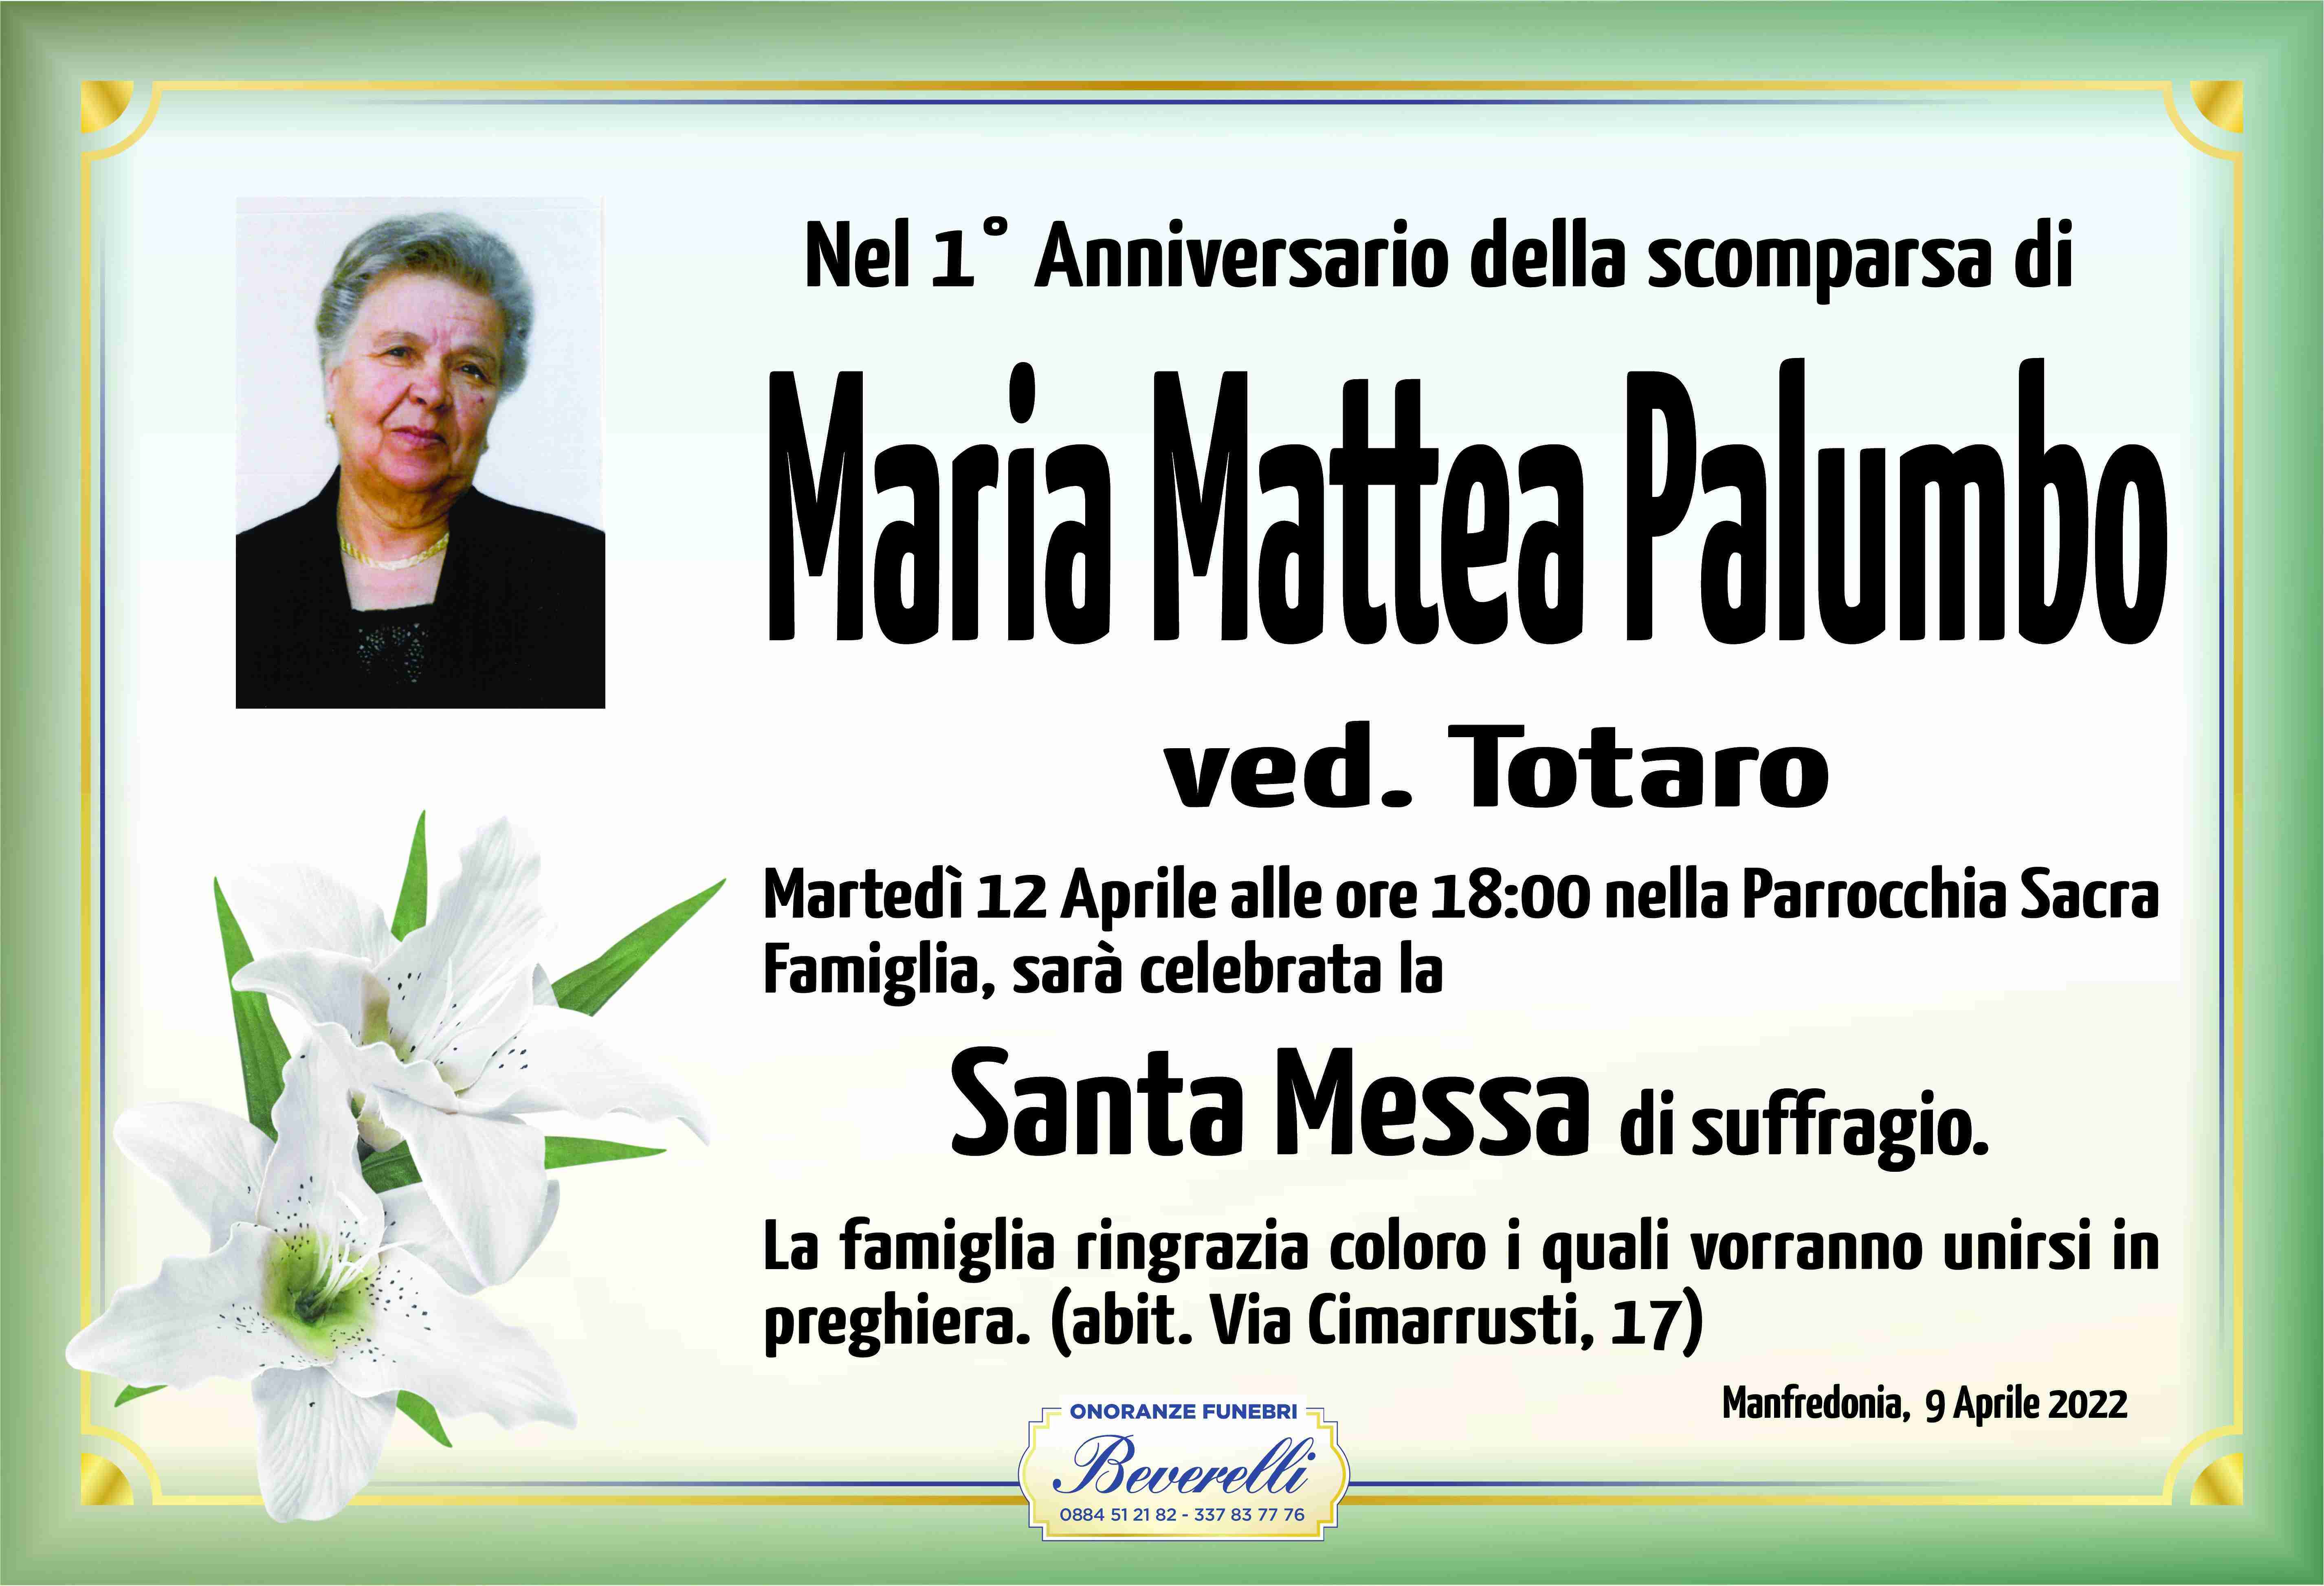 Maria Mattea Palumbo